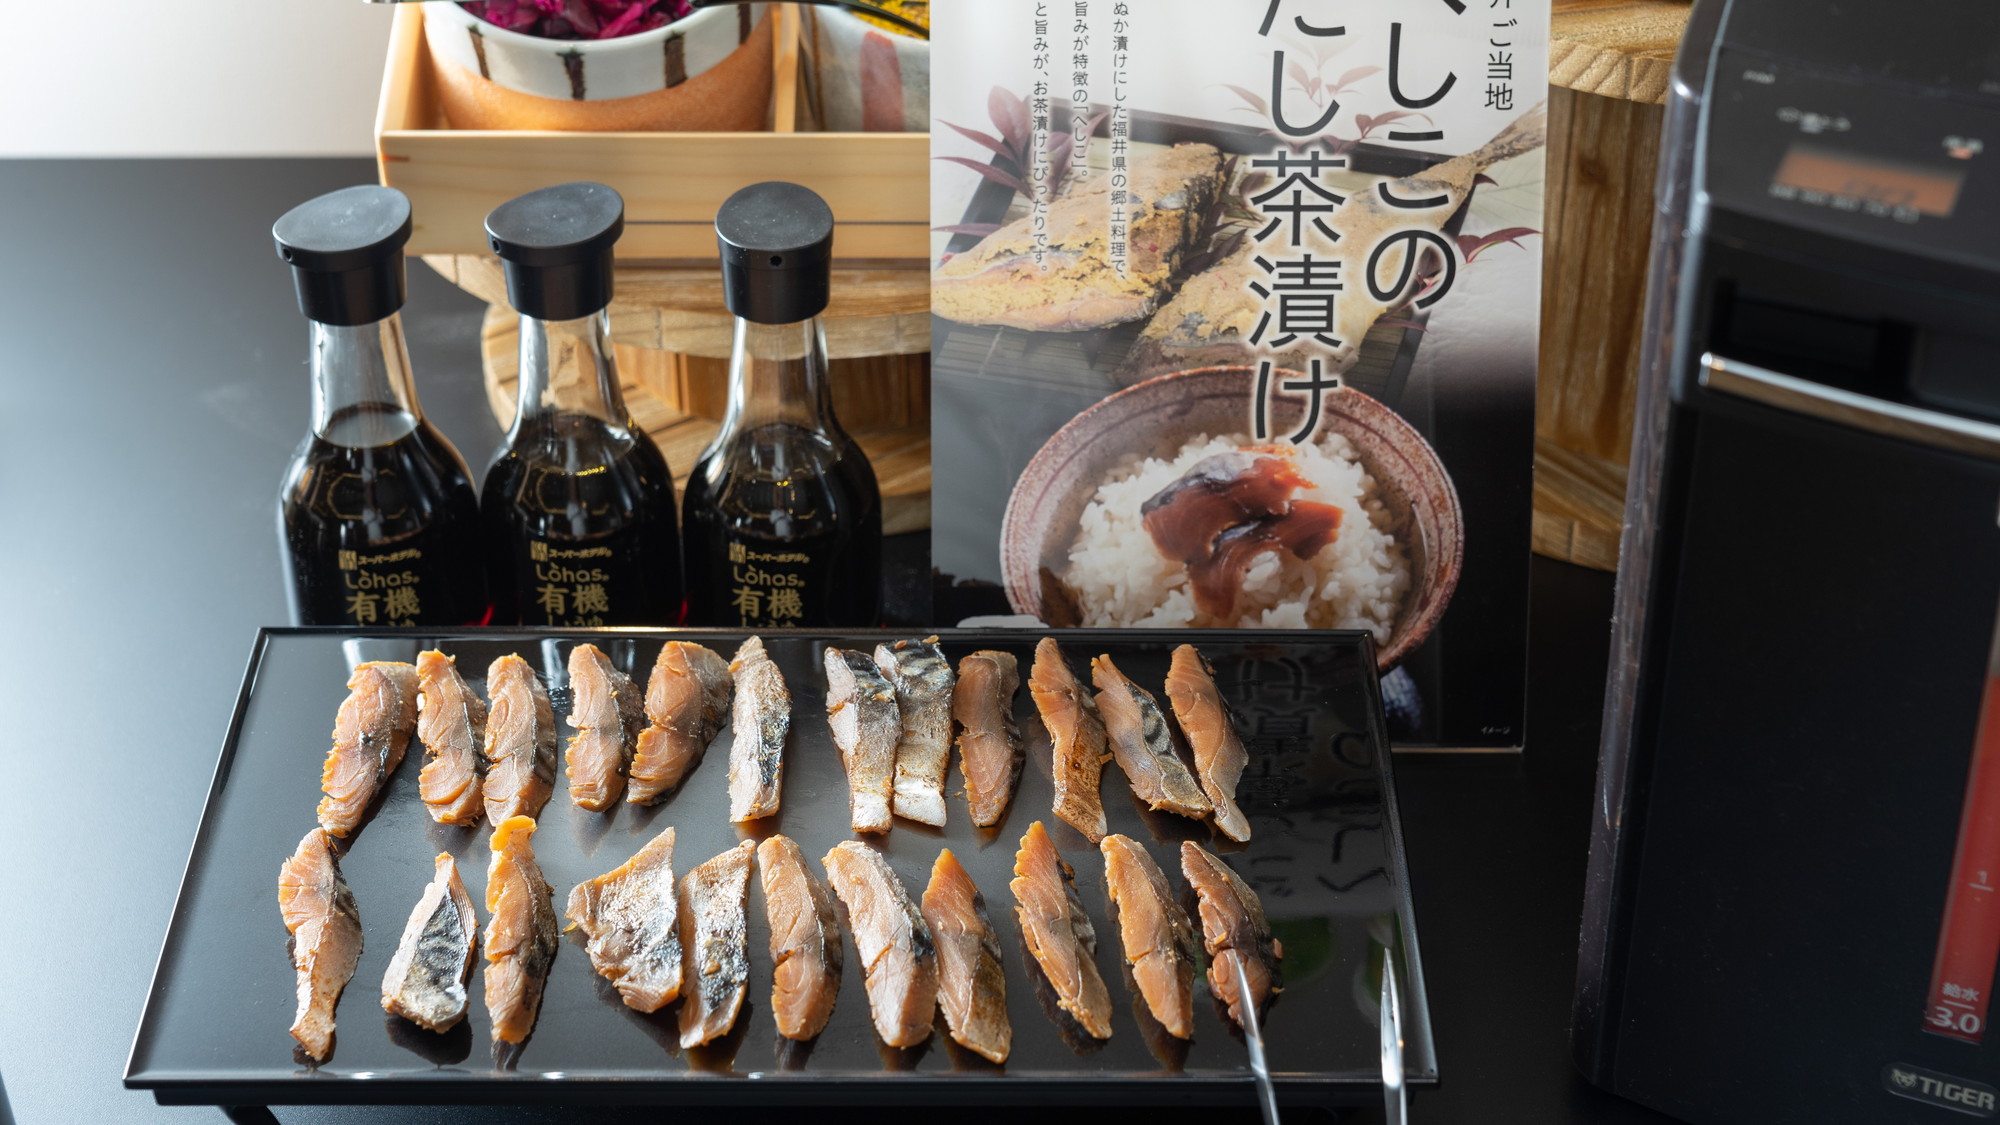 【Organic】「へしこのだし茶漬け」さばをぬか漬けにした福井県の郷土料理です♪